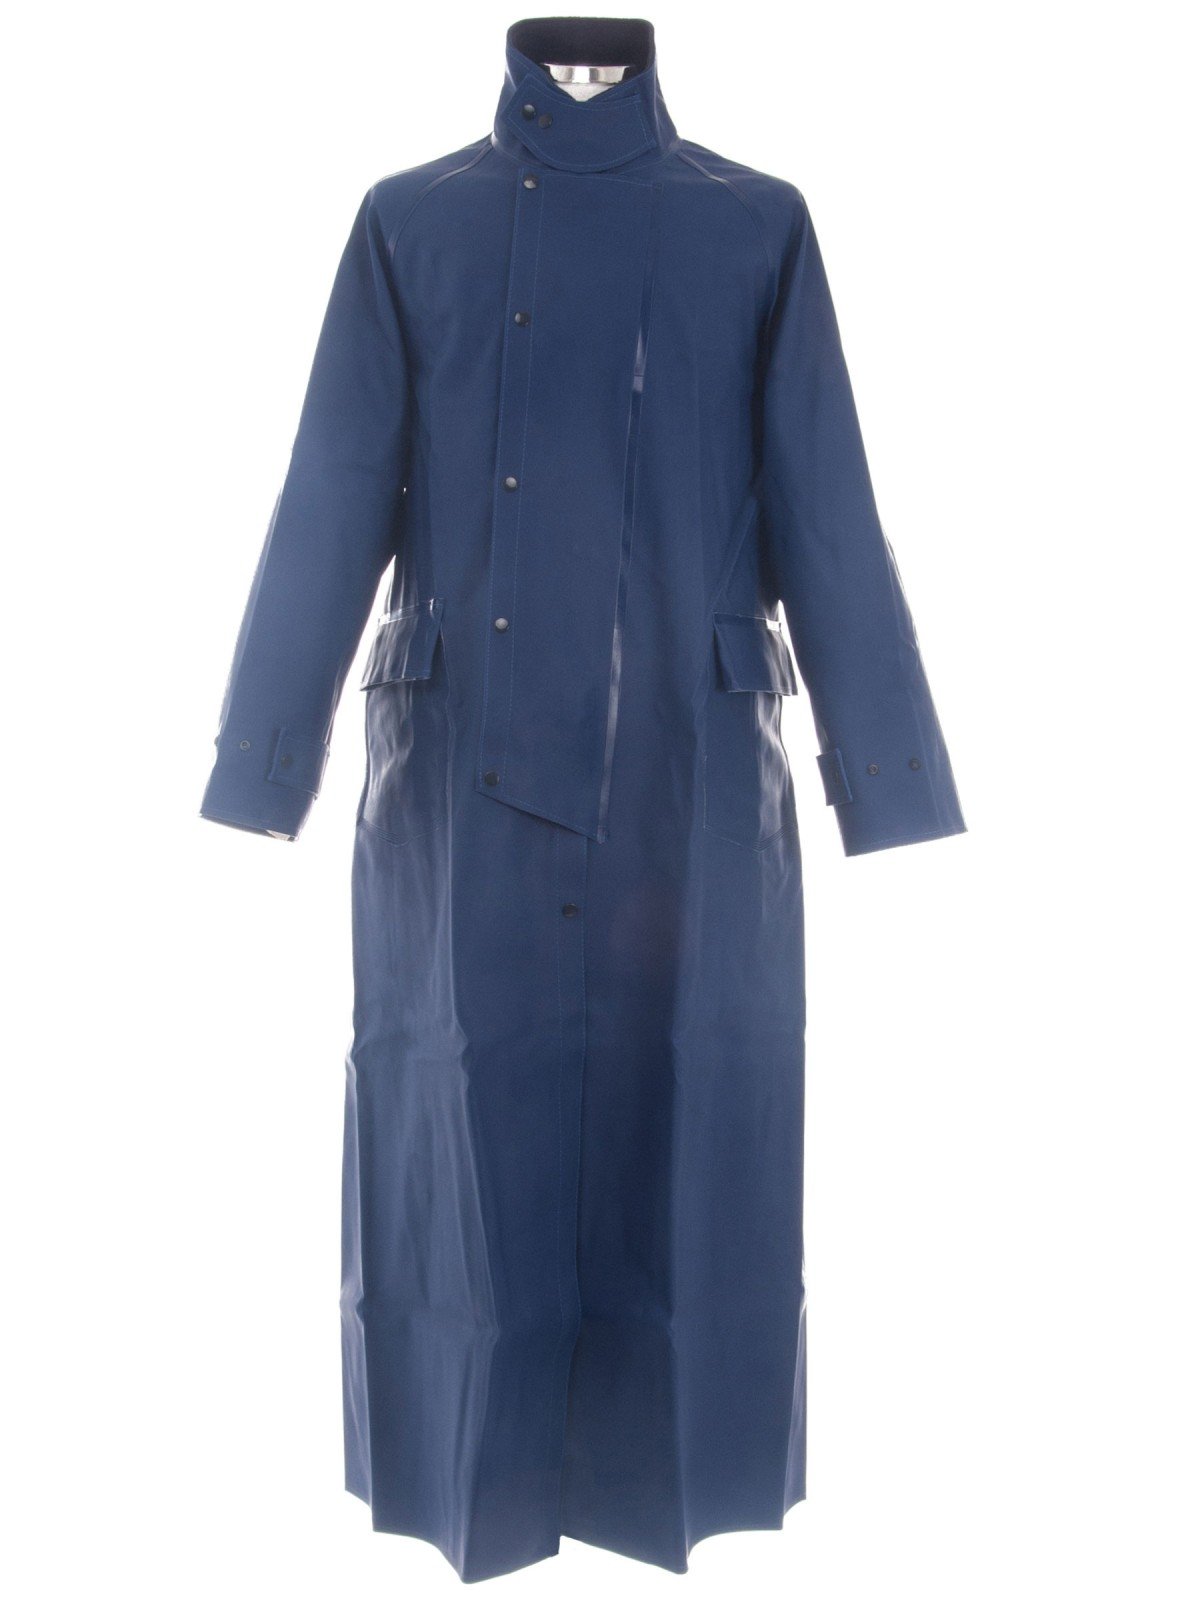 Stormline PVC Raincoat